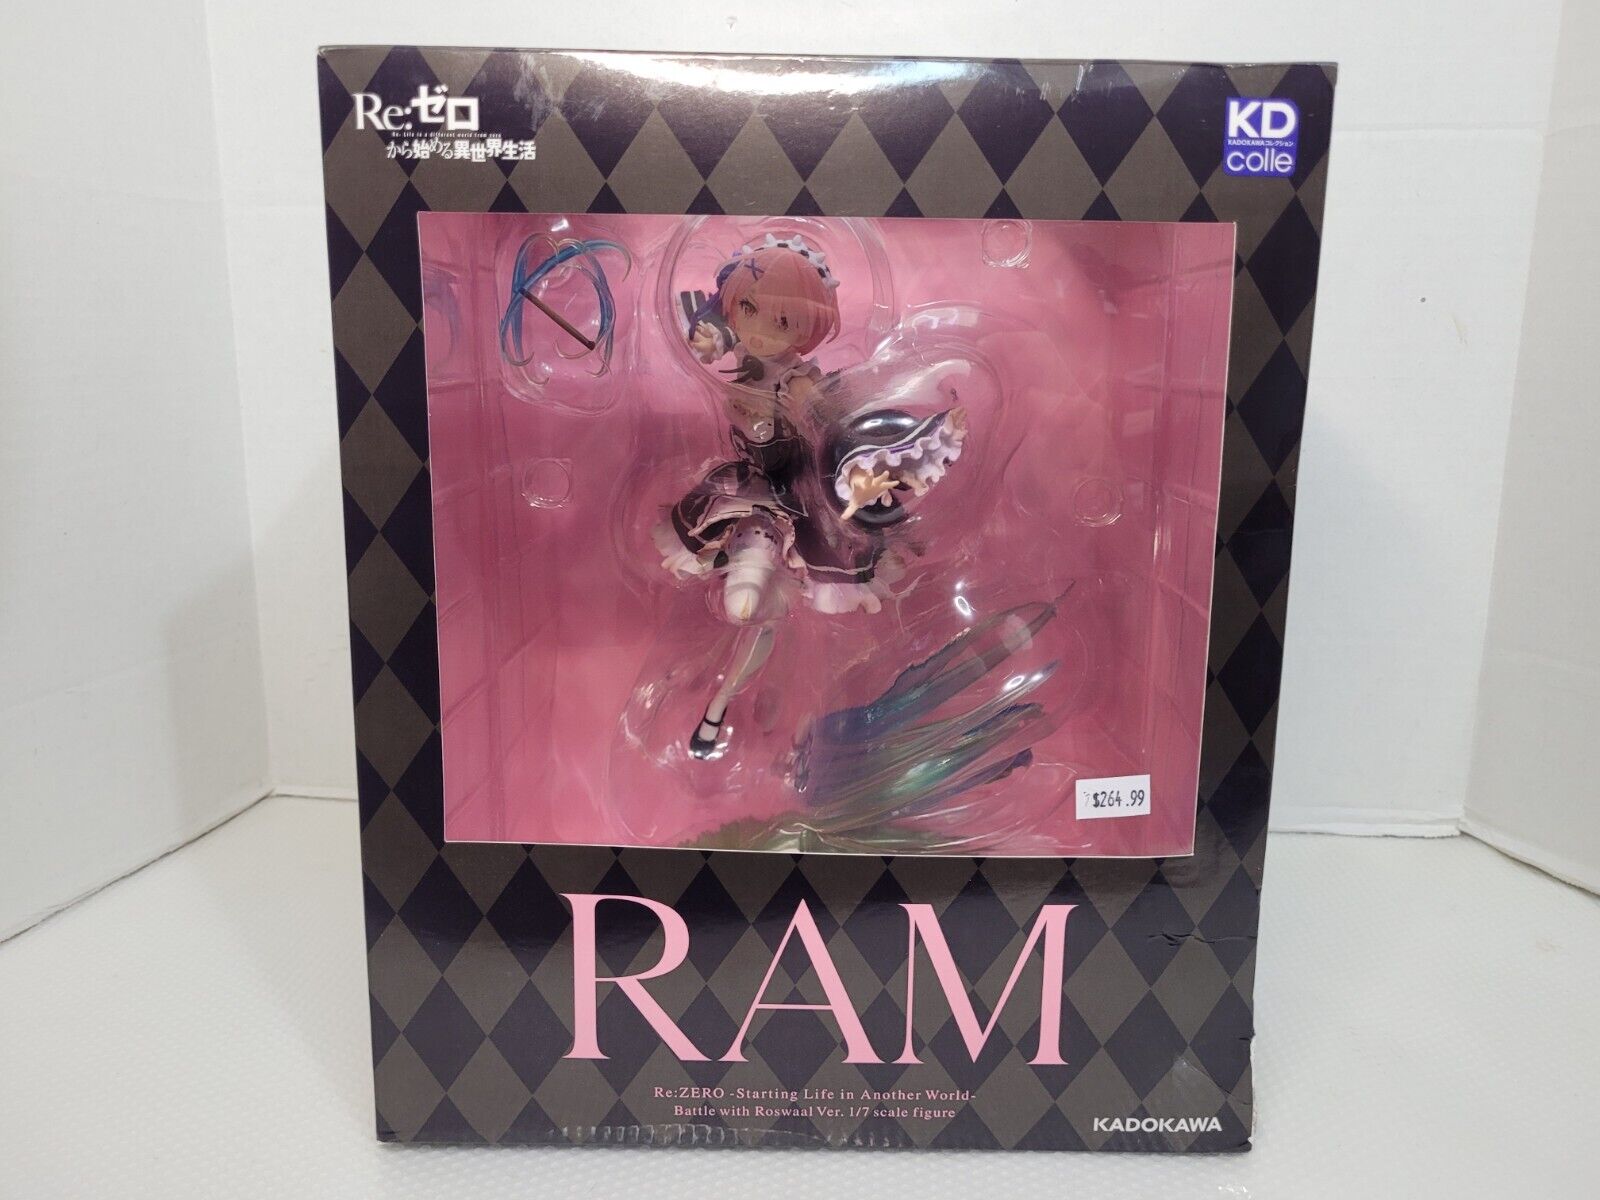 KADOKAWA KDcolle Re:ZERO RAM Battle with Roswaal Ver. 1/7 PVC Figure Statue Jp